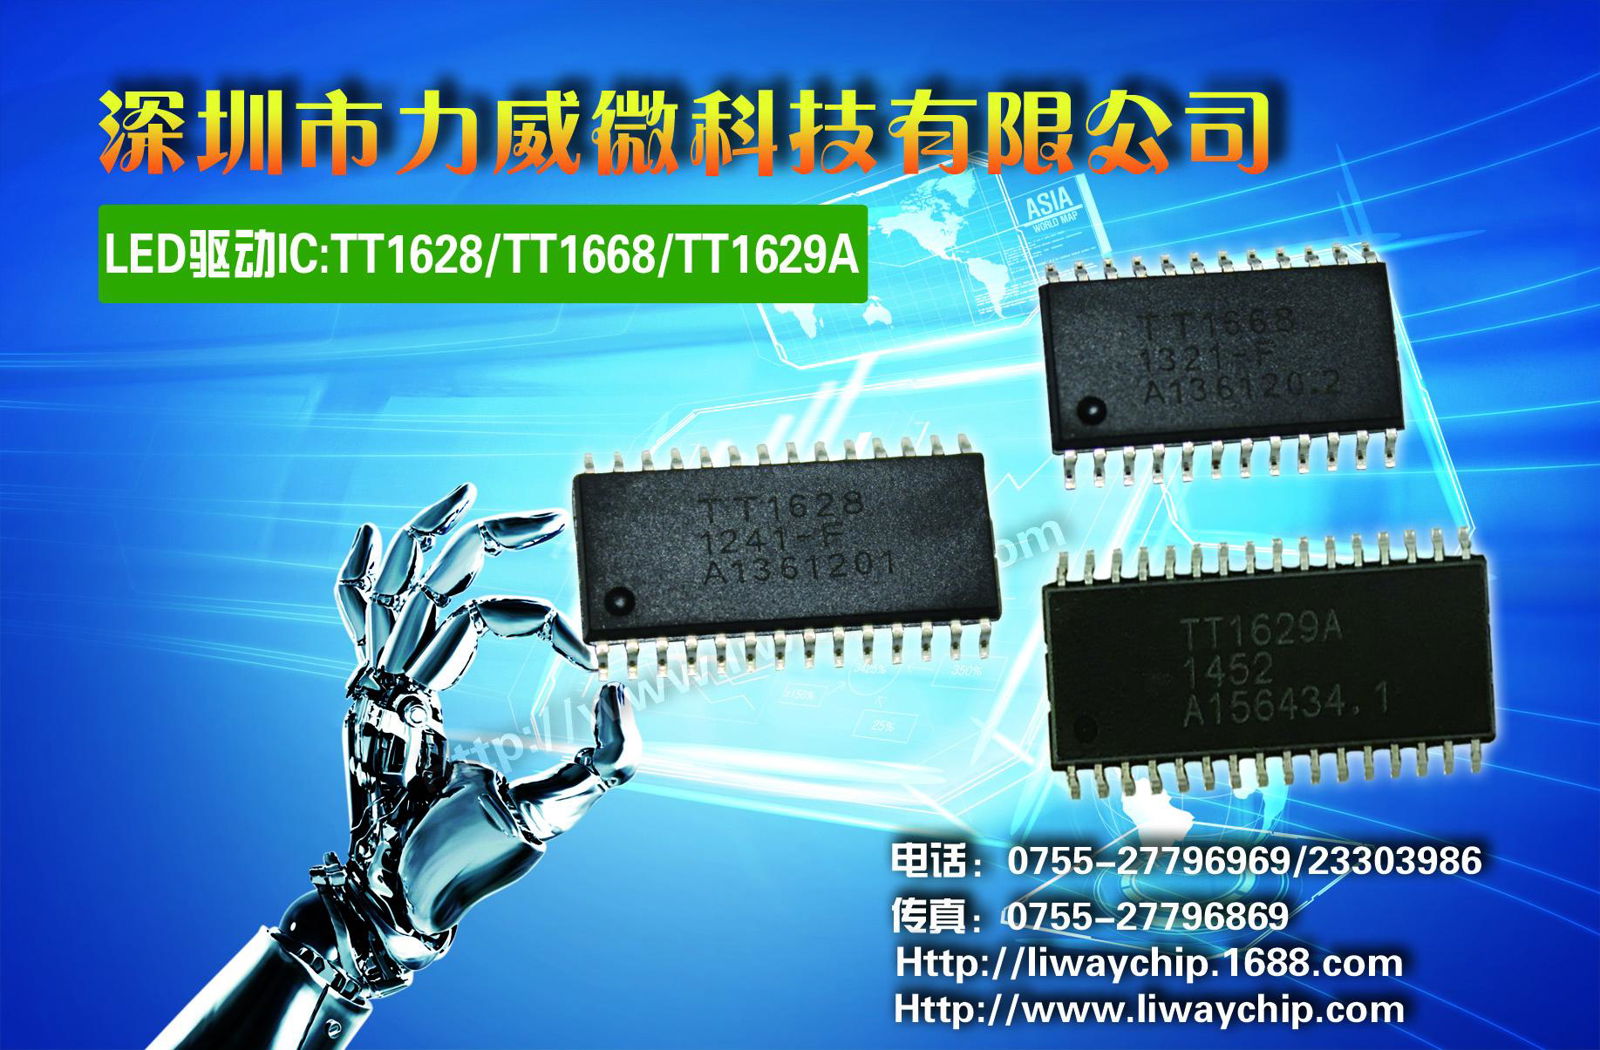 LED驅動控制專用電路IC  TT1628 2